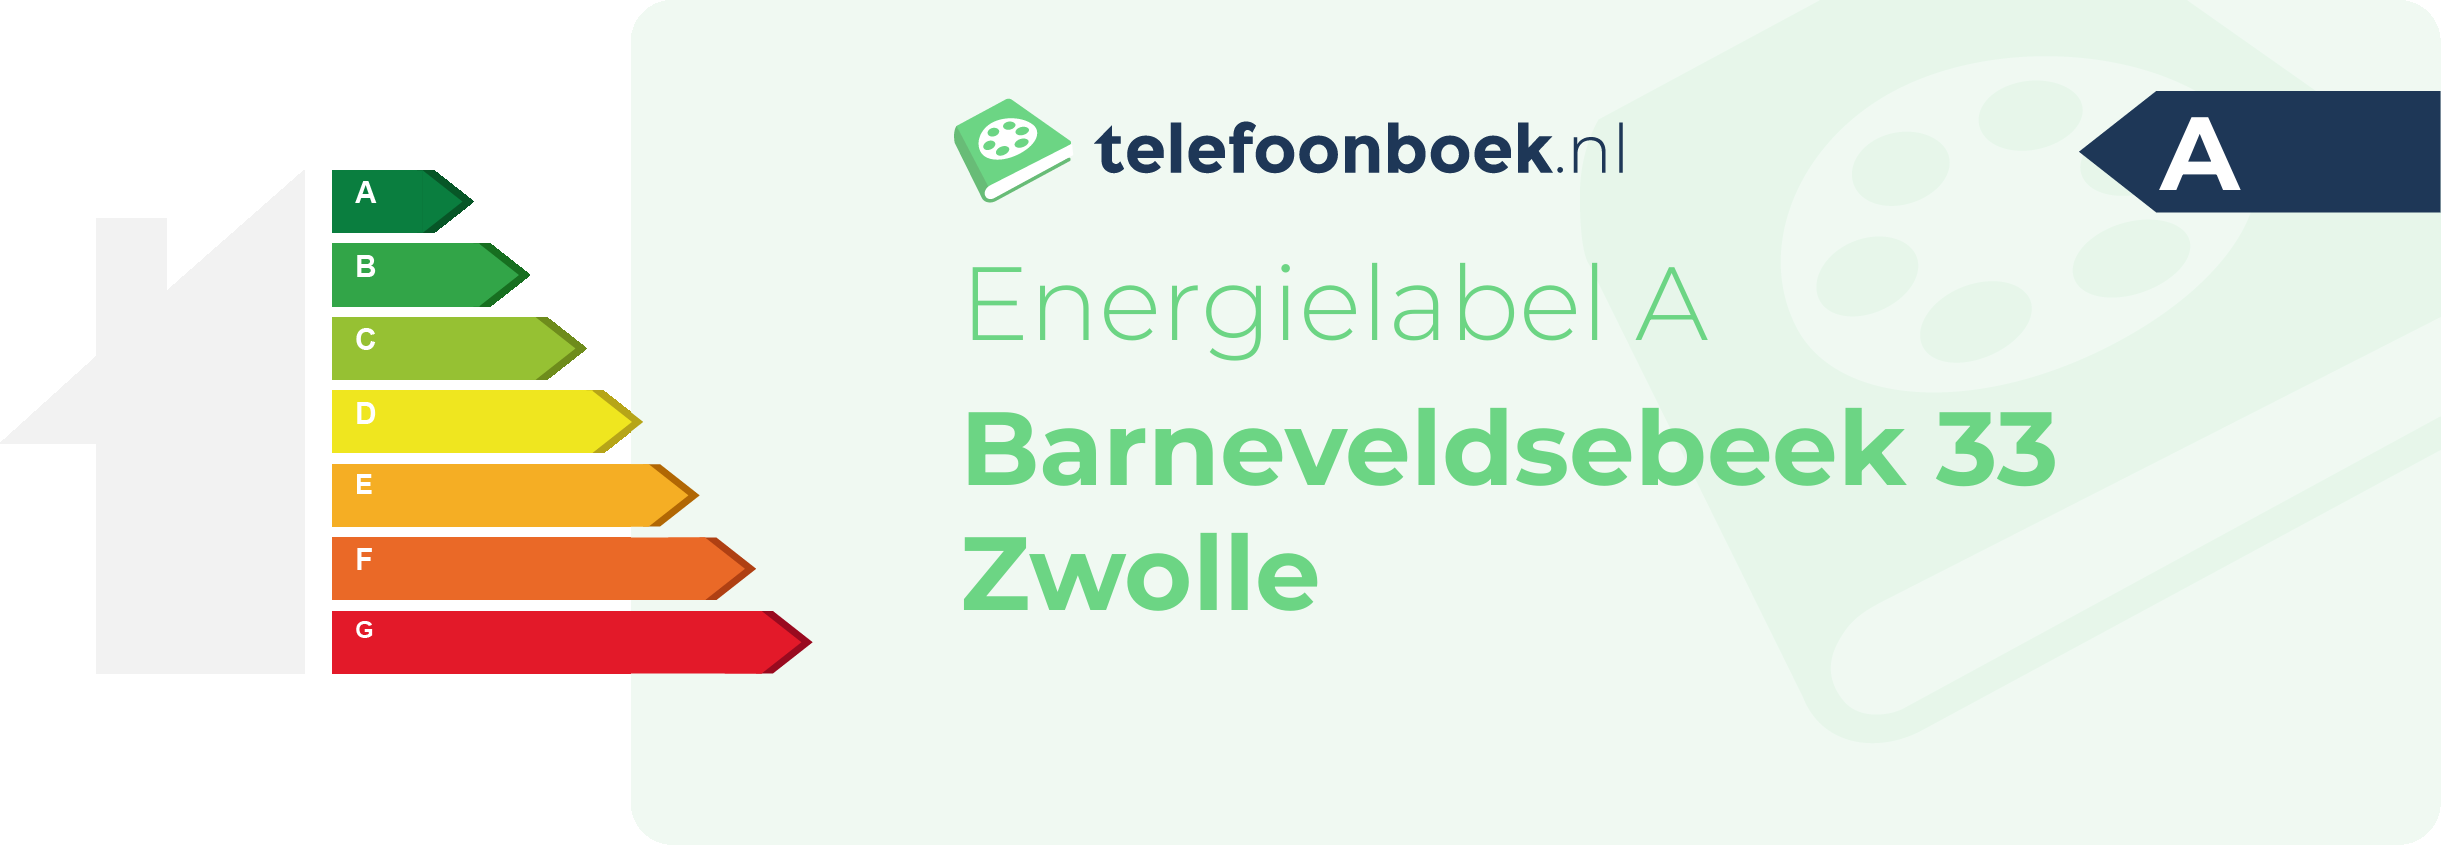 Energielabel Barneveldsebeek 33 Zwolle